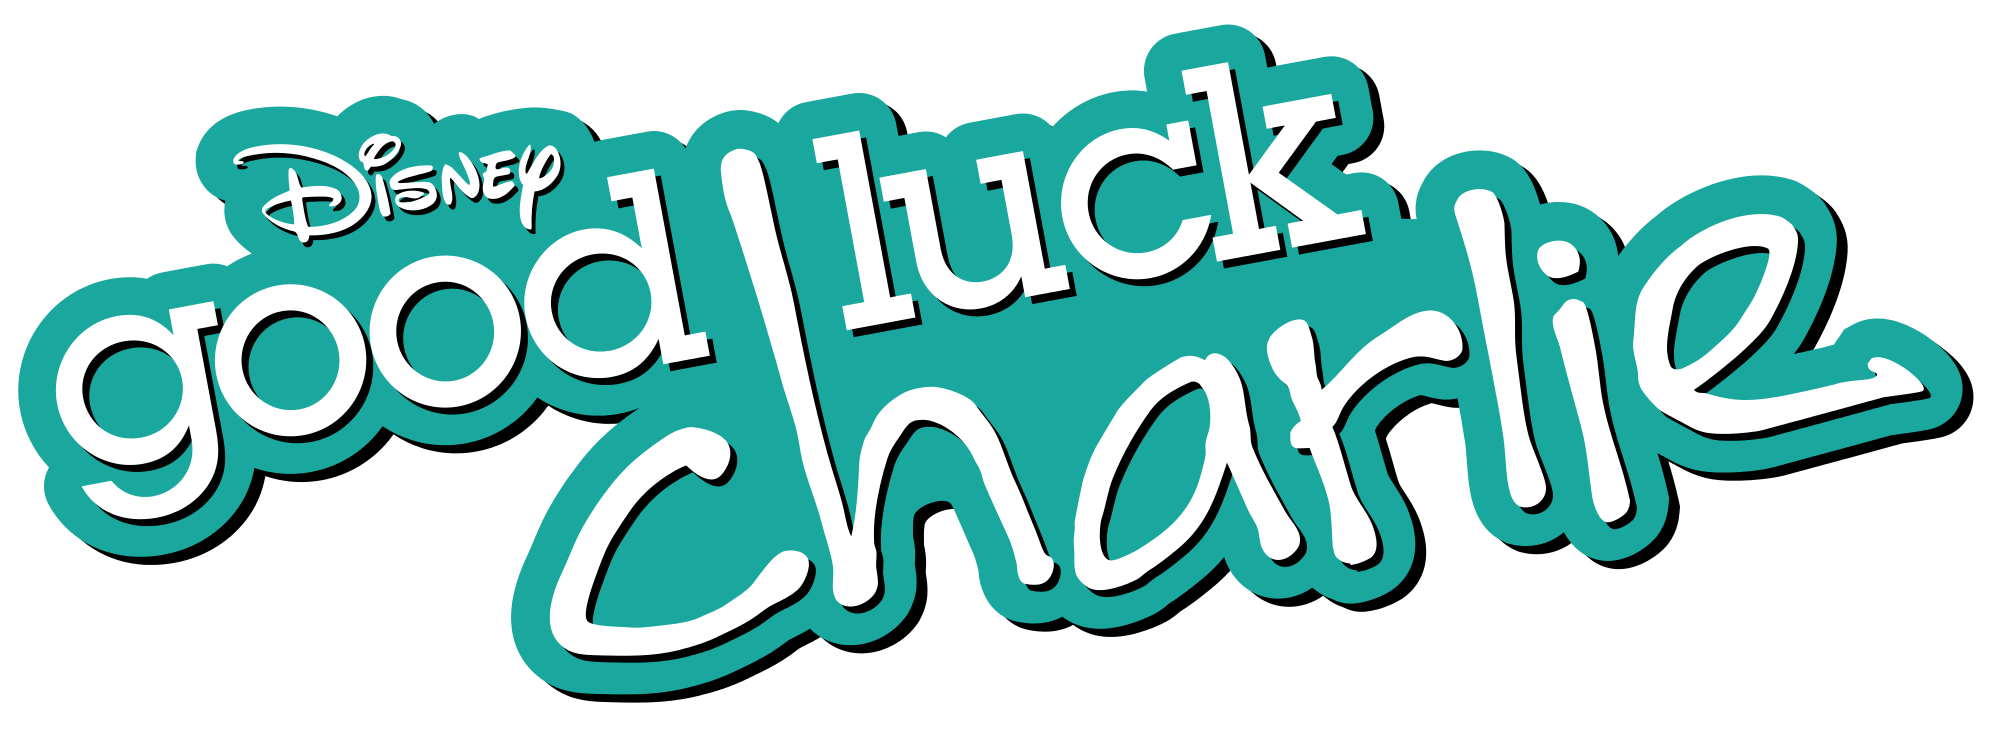 Current Disney Channel Logo - Good Luck Charlie